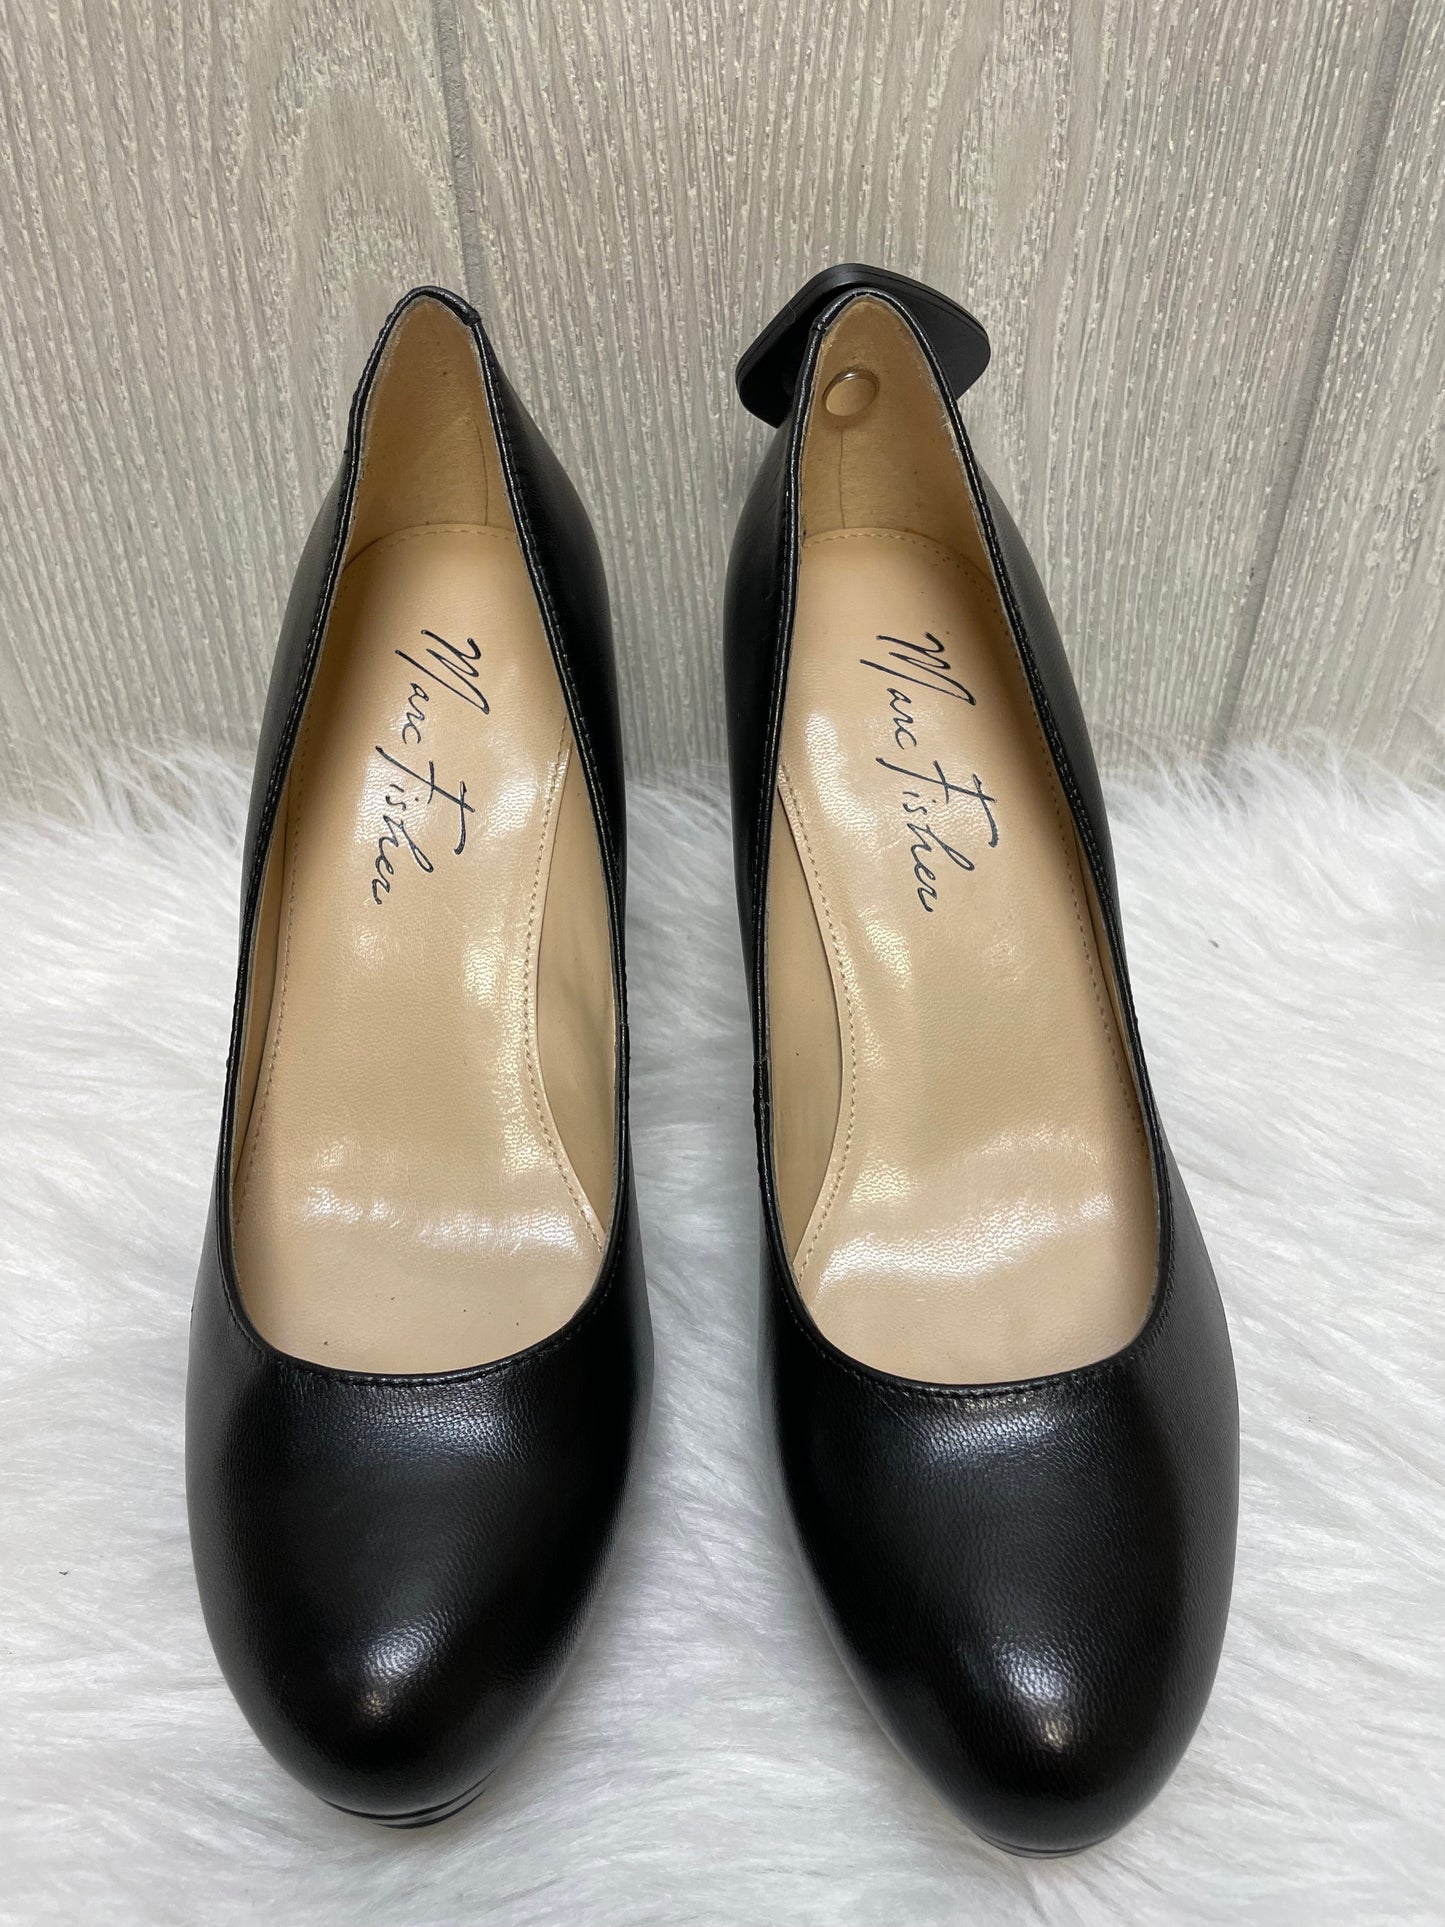 Black Shoes Heels Stiletto Marc Fisher, Size 7.5